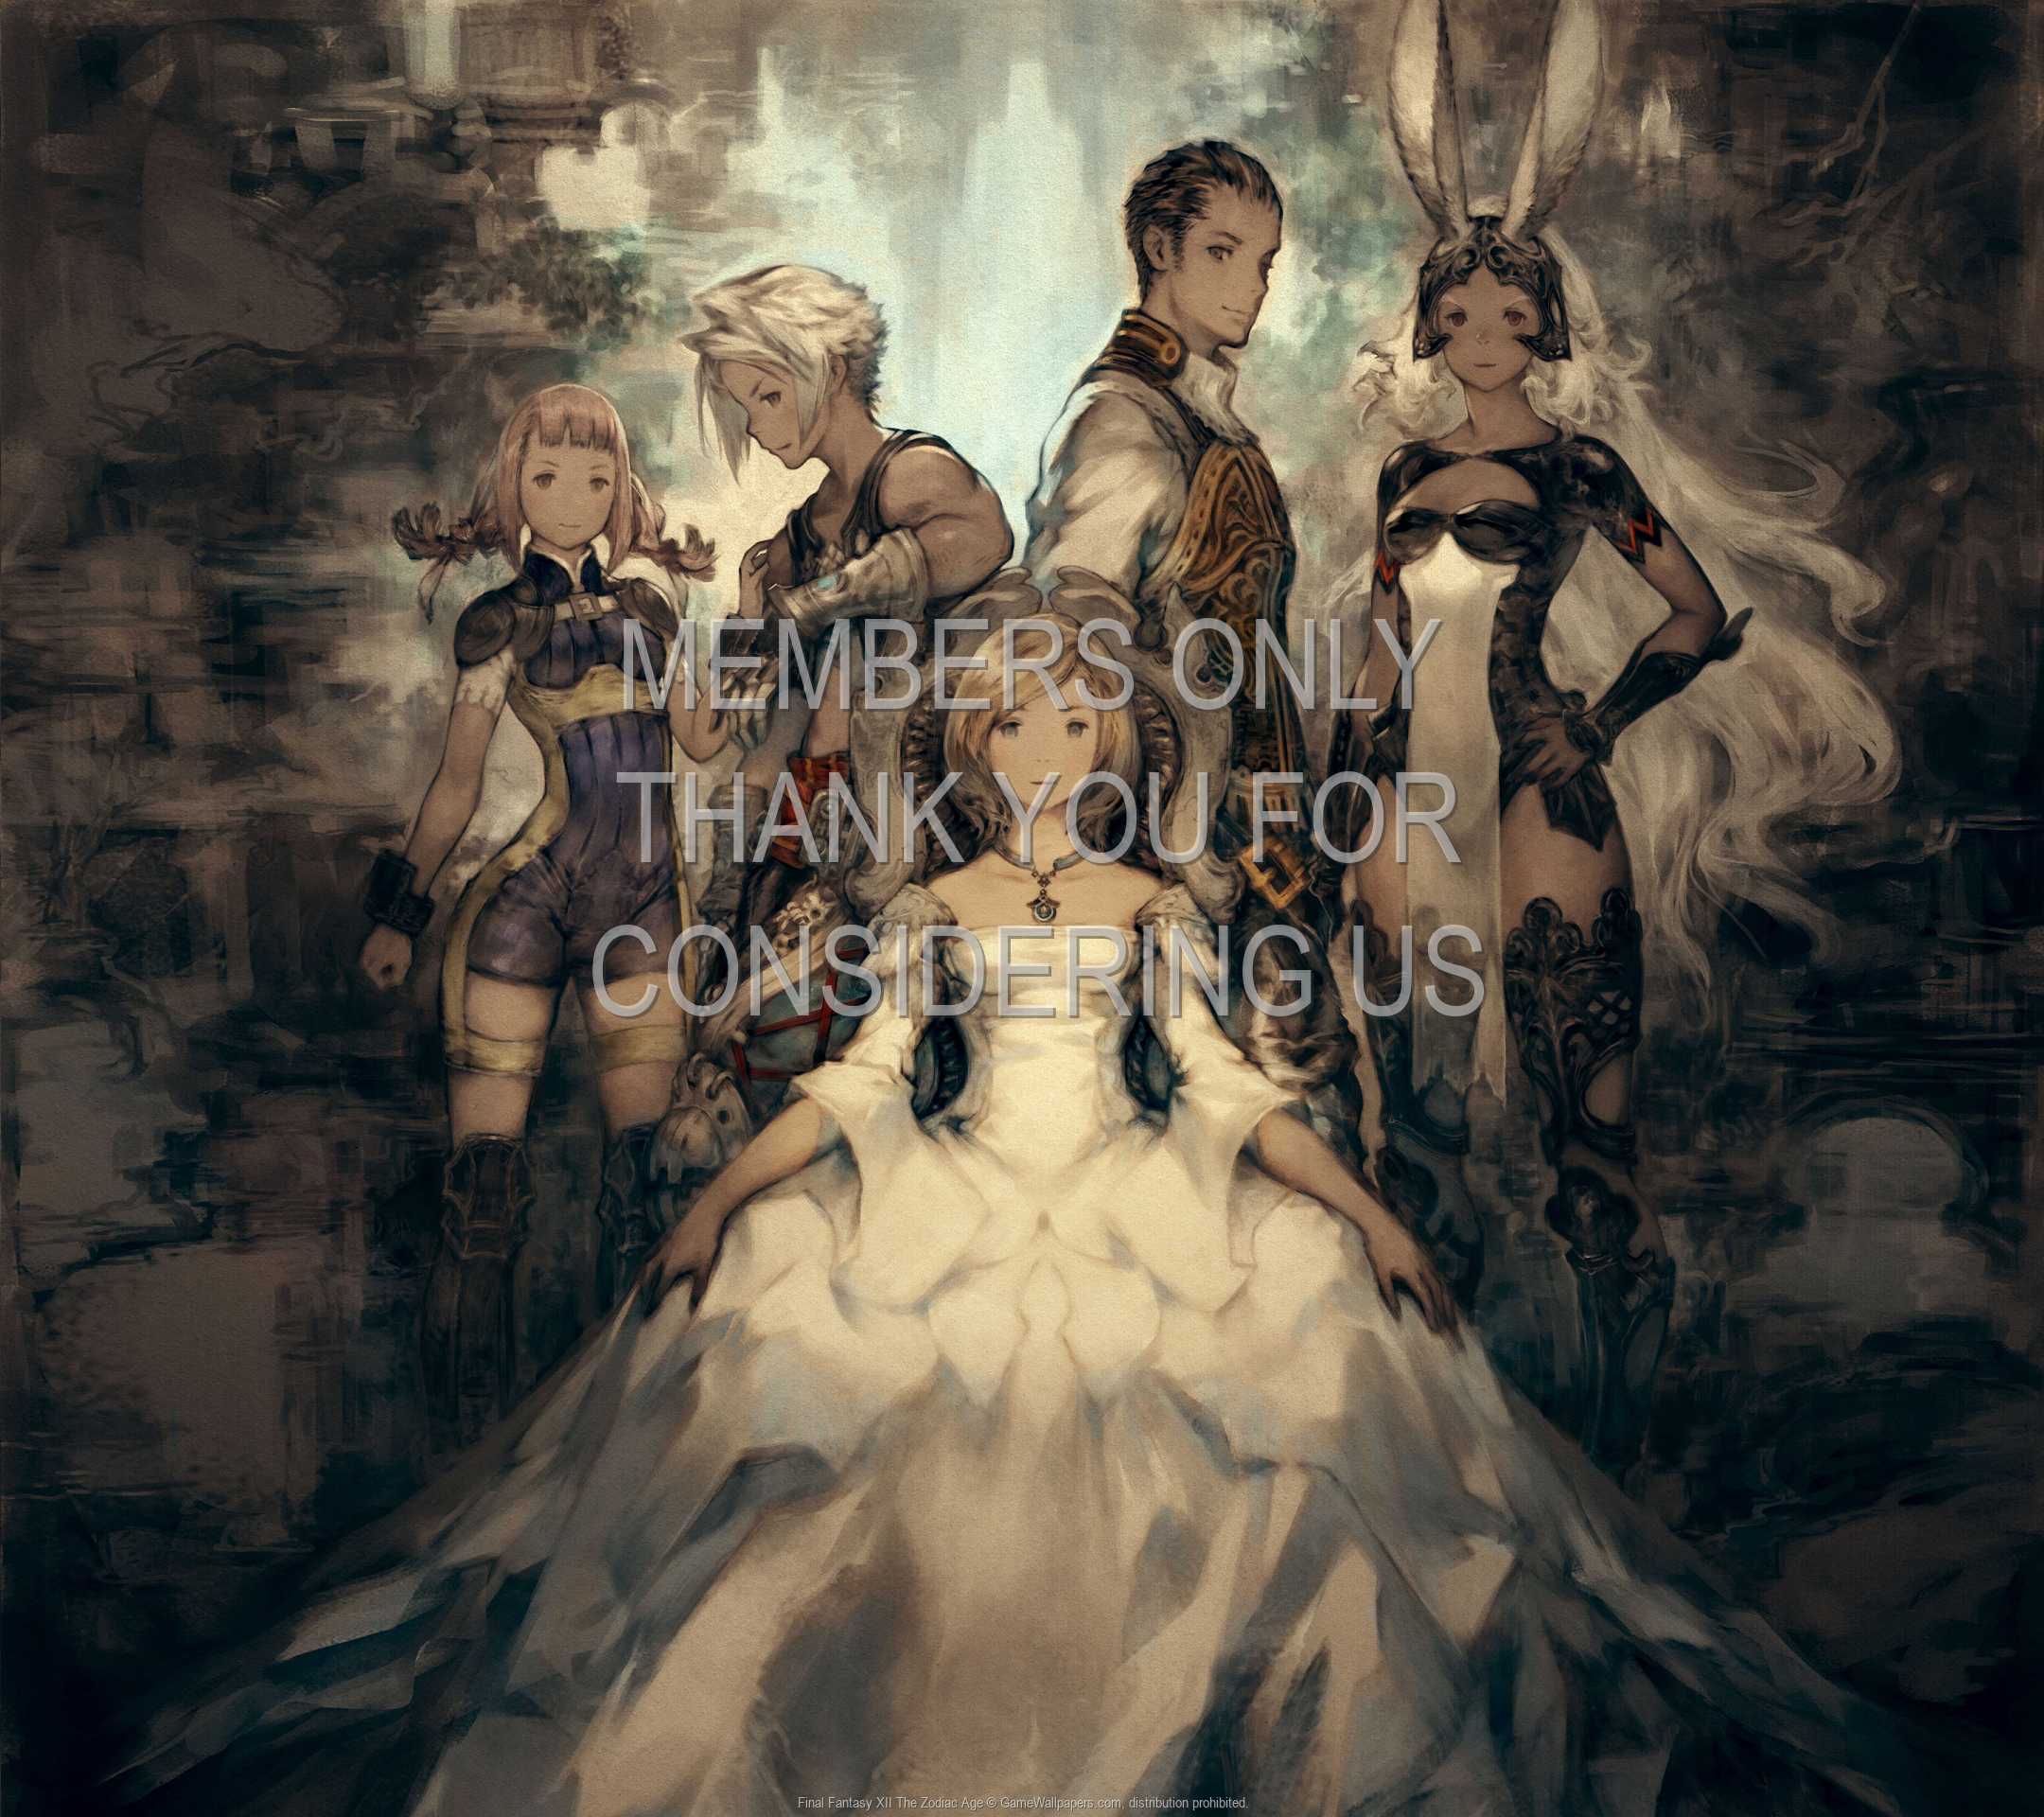 Final Fantasy XII The Zodiac Age 1080p Horizontal Mobile wallpaper or background 01